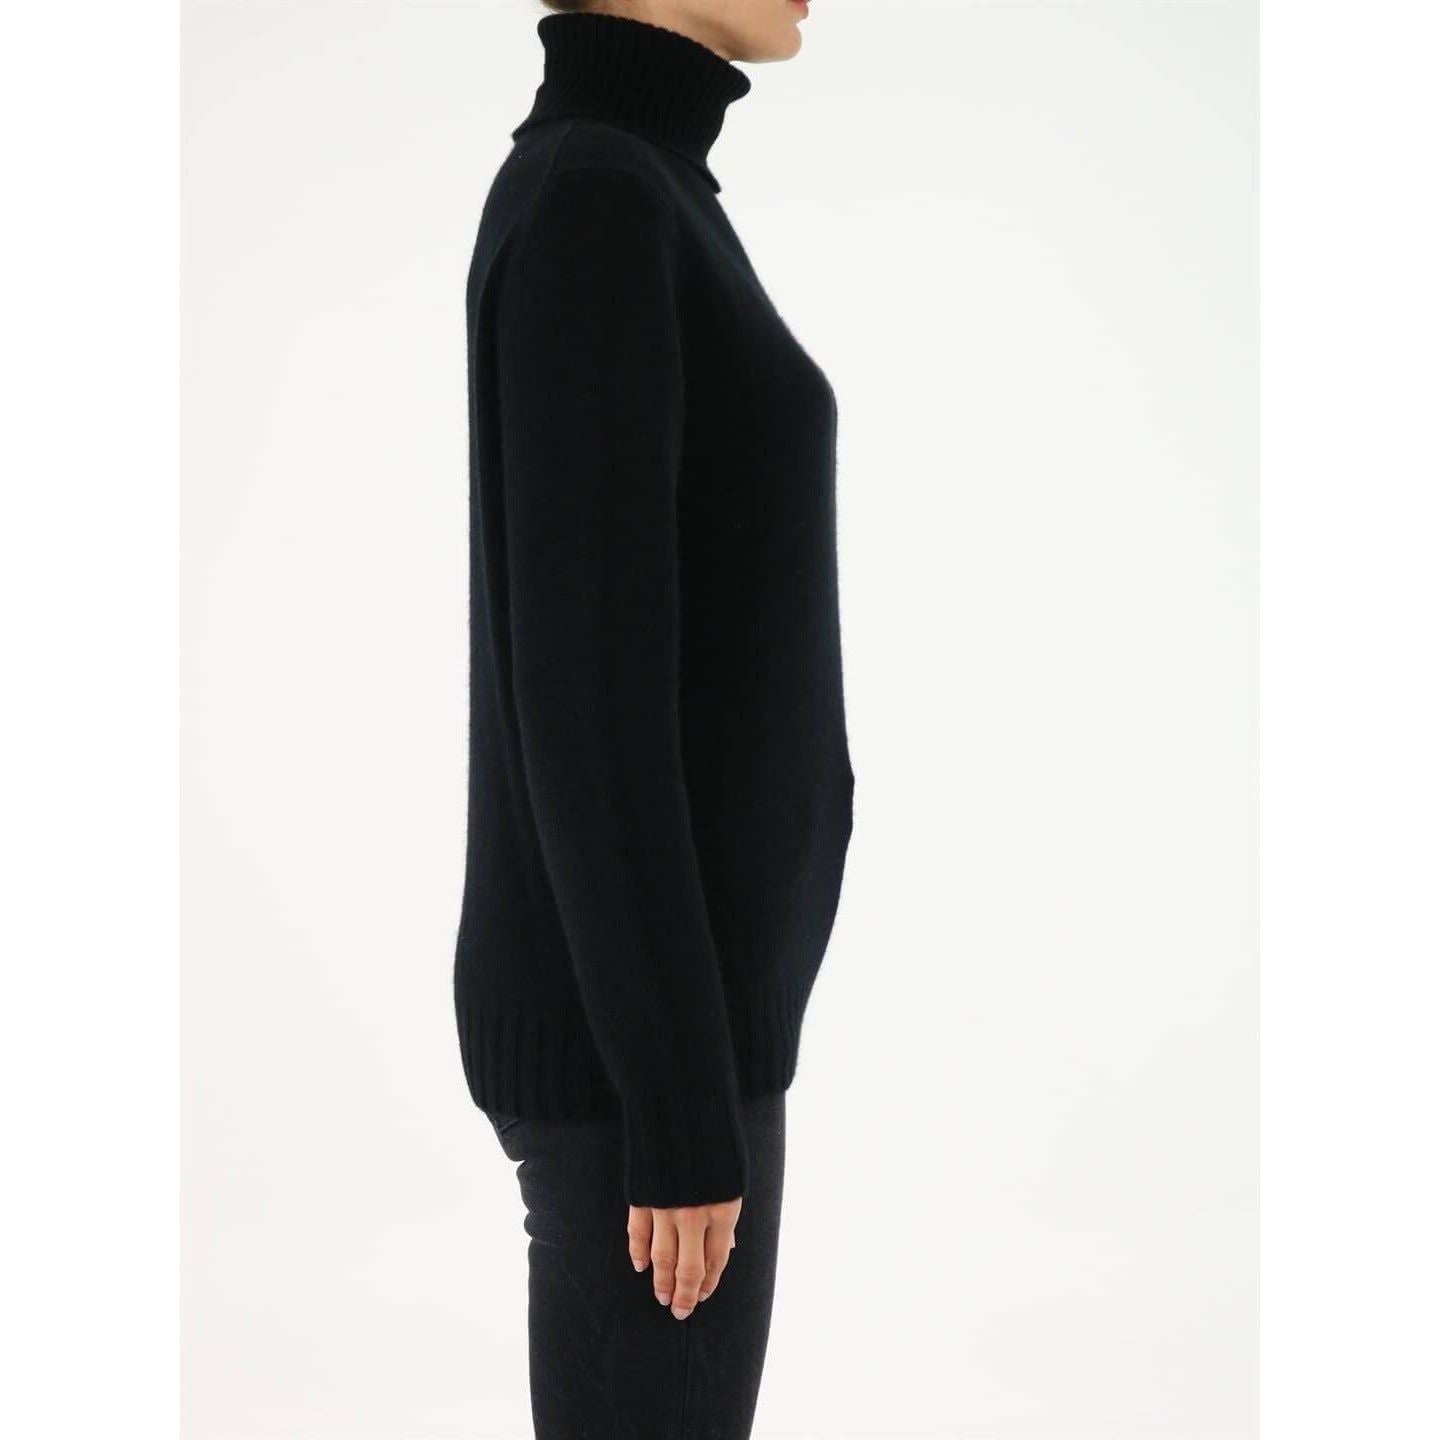 ALLUDE Allude Black Roll-Neck Cashmere Sweater WOMAN KNITWEAR allude-black-roll-neck-cashmere-sweater MjkyMjky.jpg